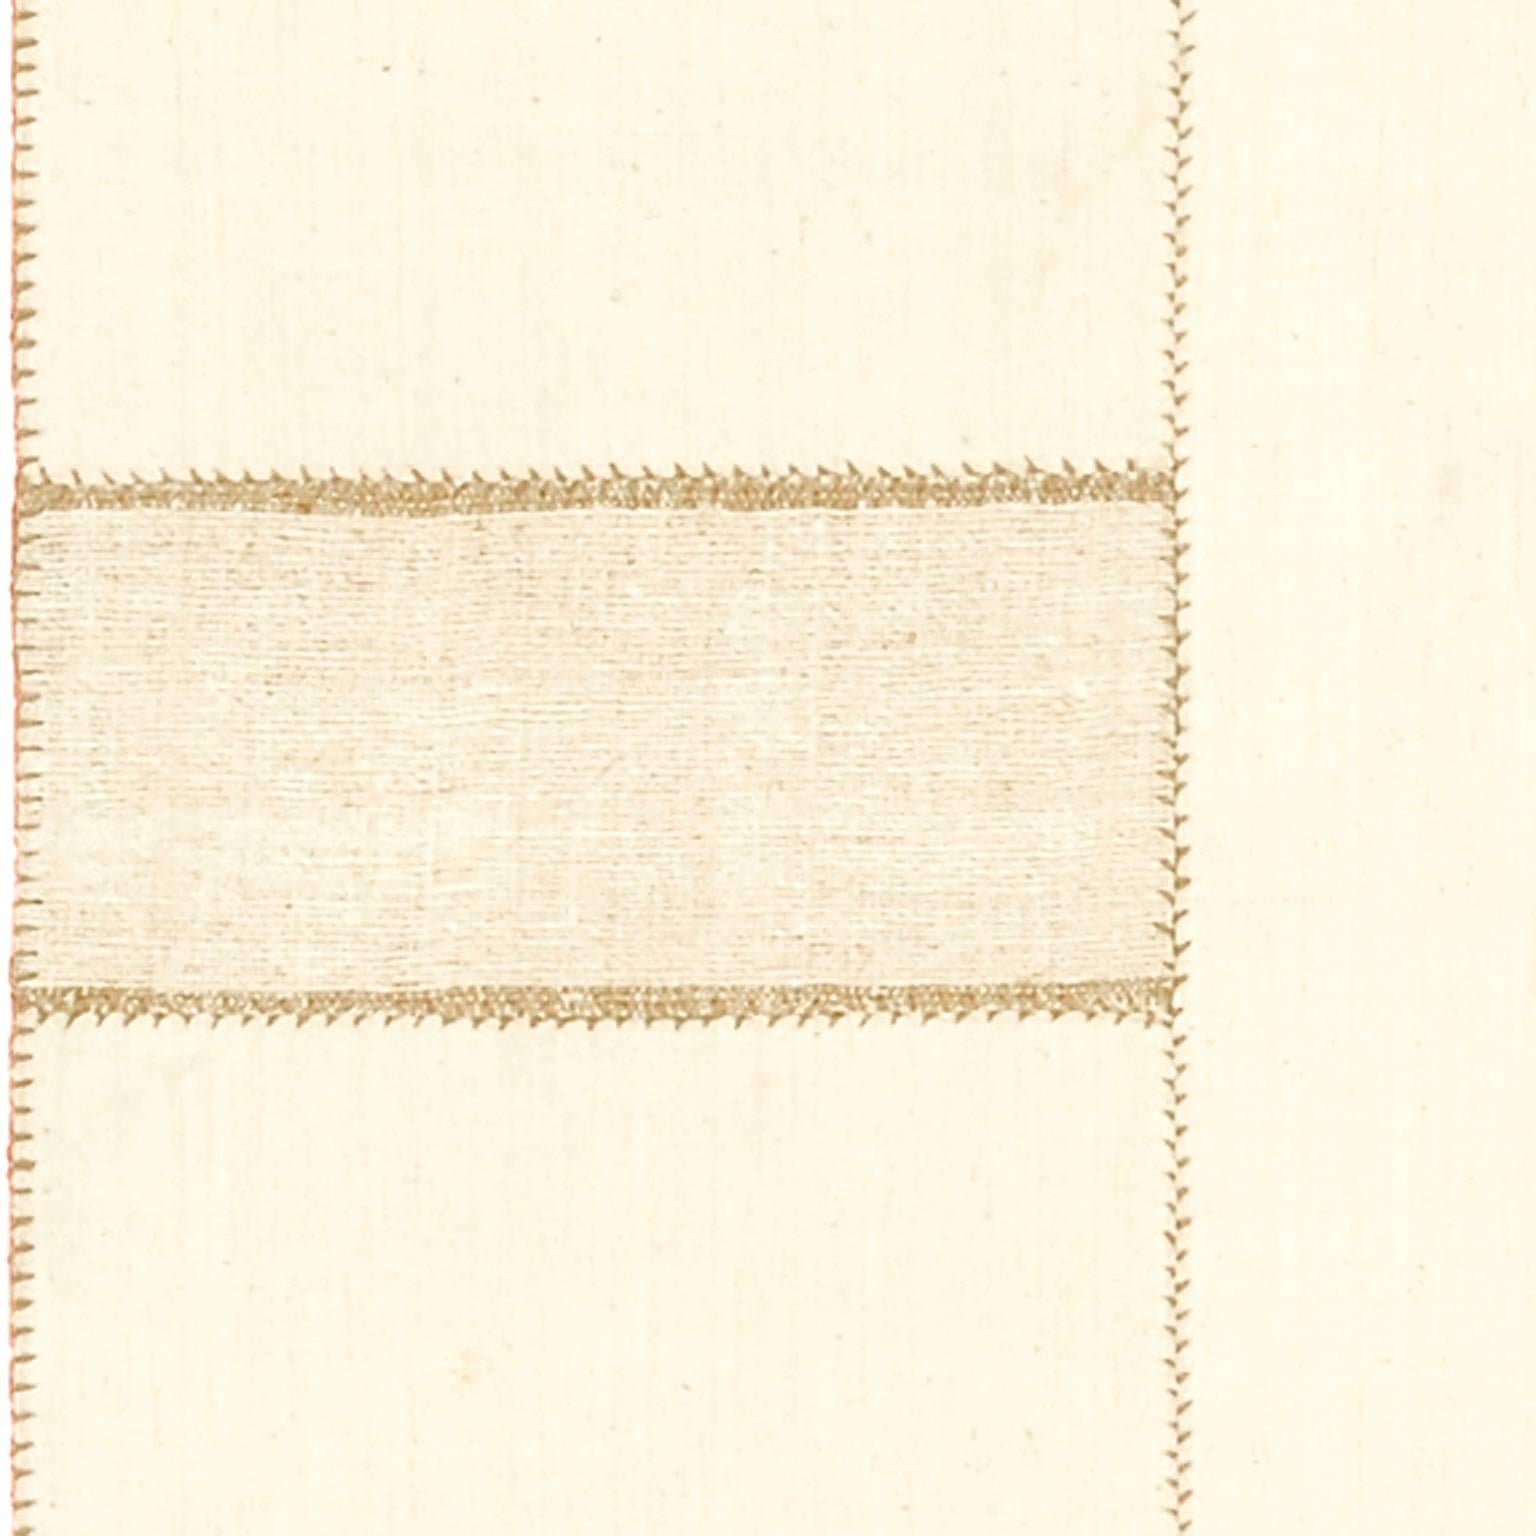 Hand-Woven Mid-20th Century Vintage Kilim Composition Carpet